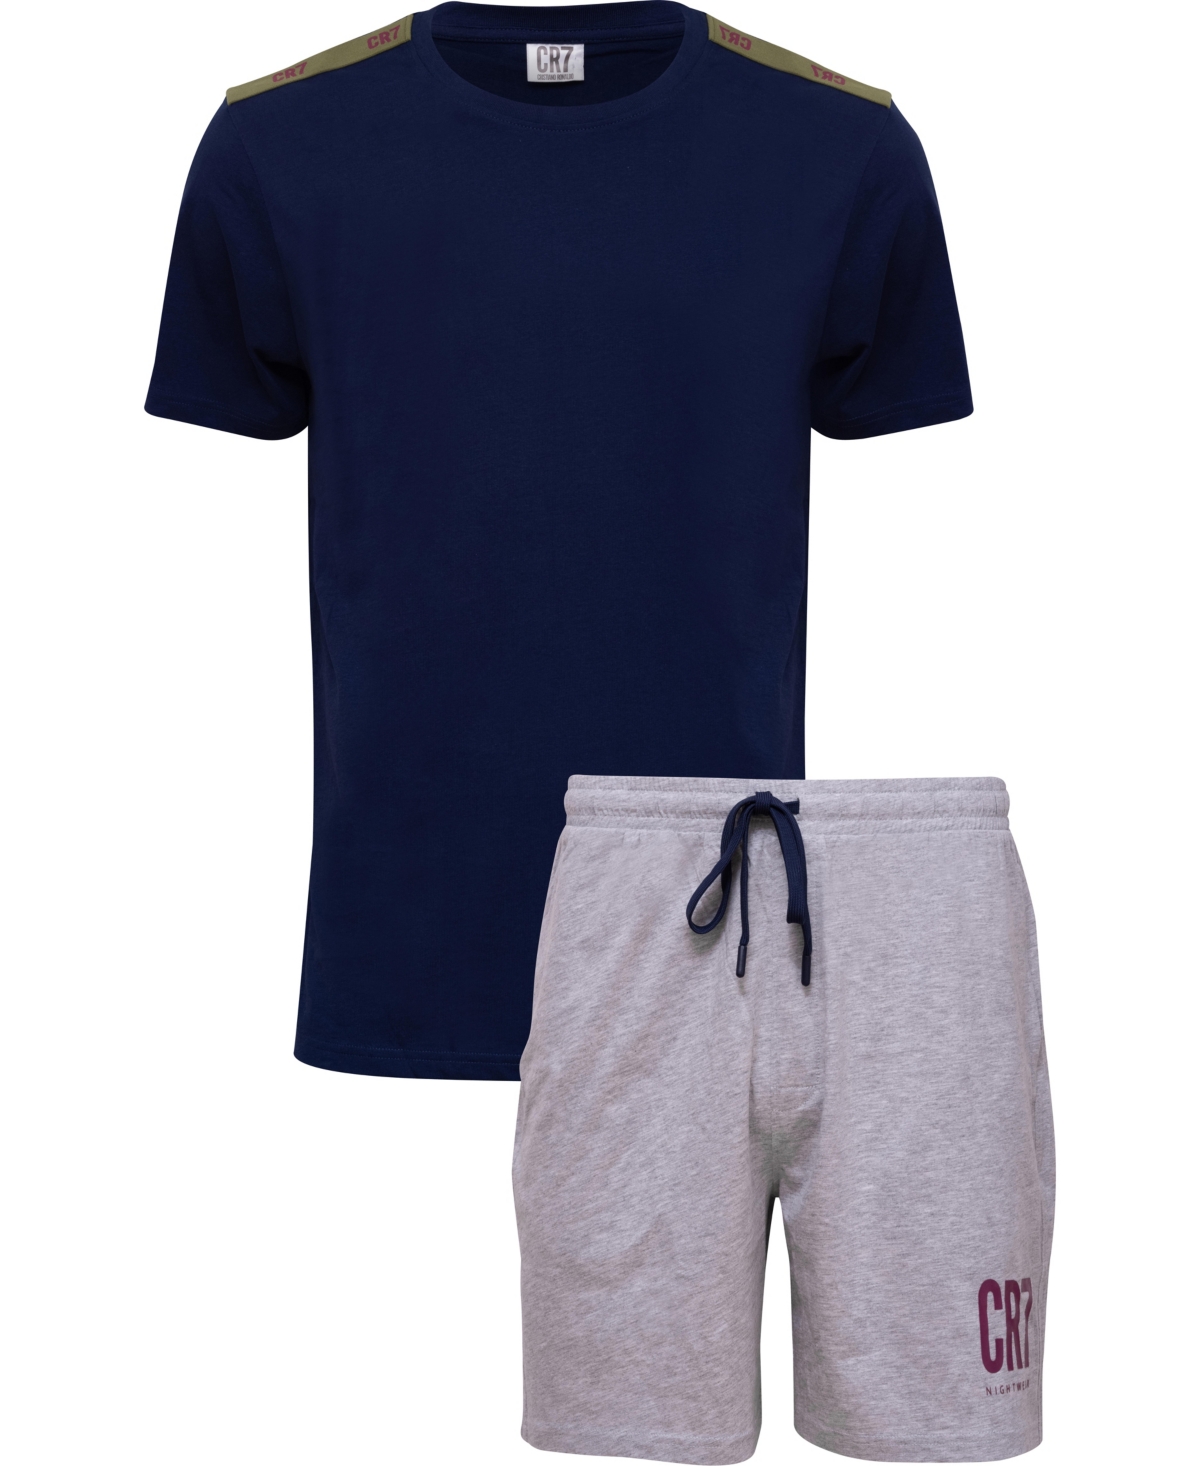 CR7 Men's Loungewear T-shirt and Shorts, 2-Piece Set